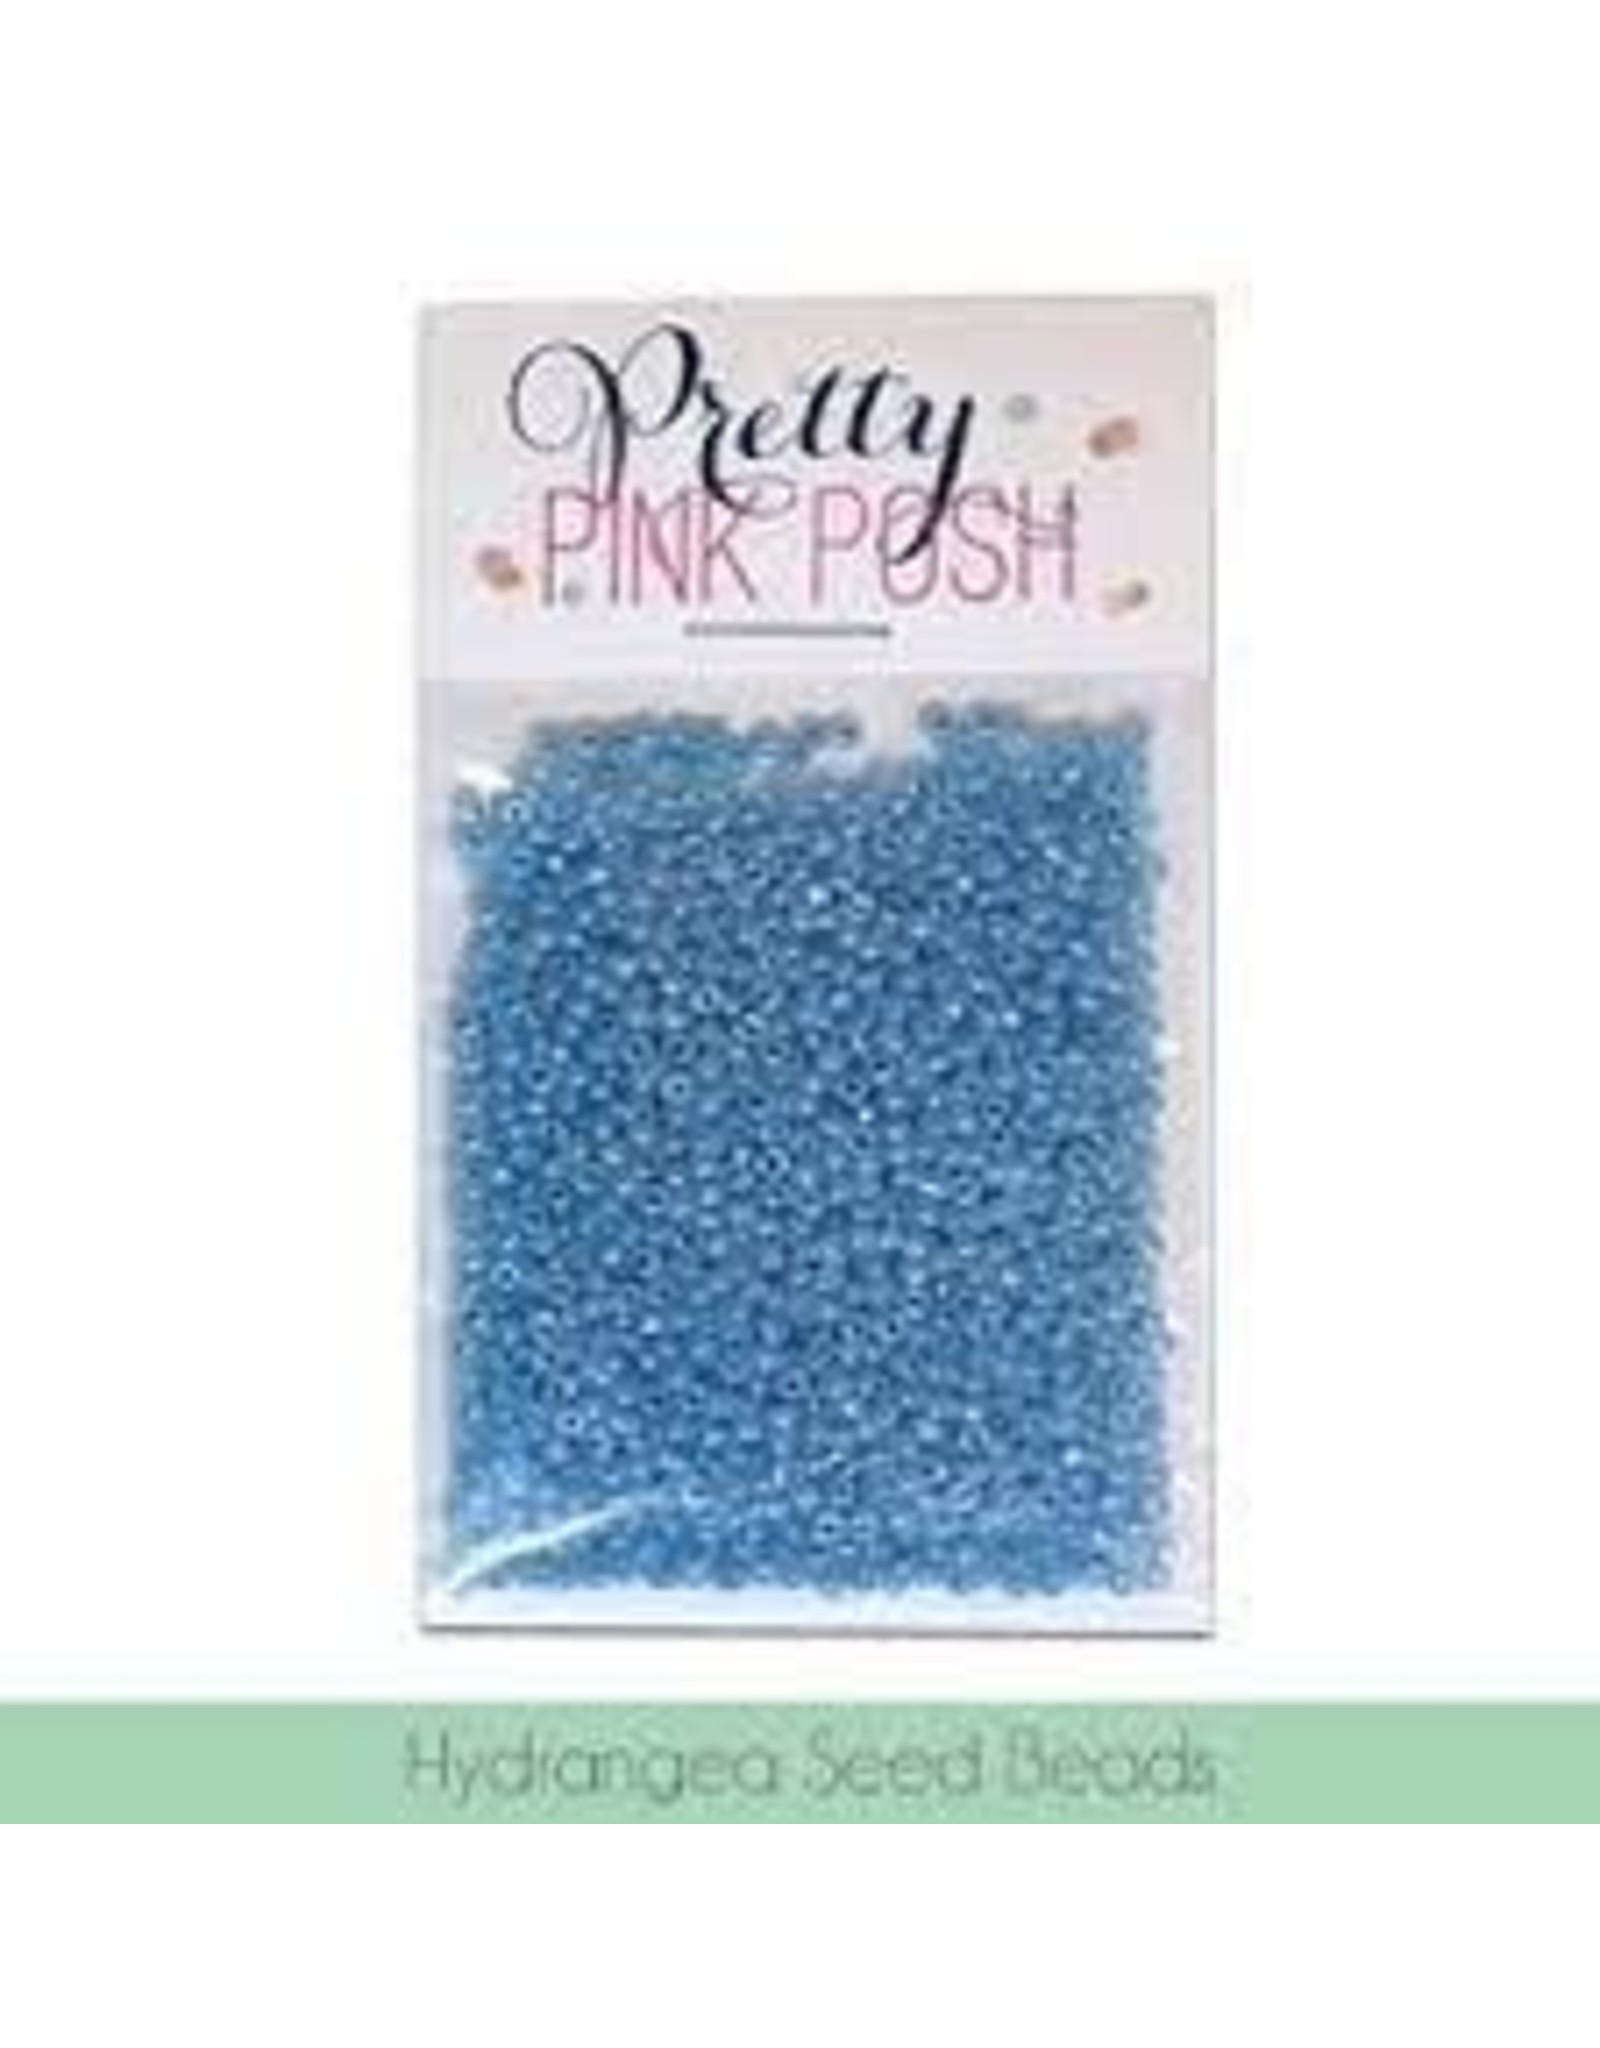 Pretty Pink Posh Hydrengea Seed Beads